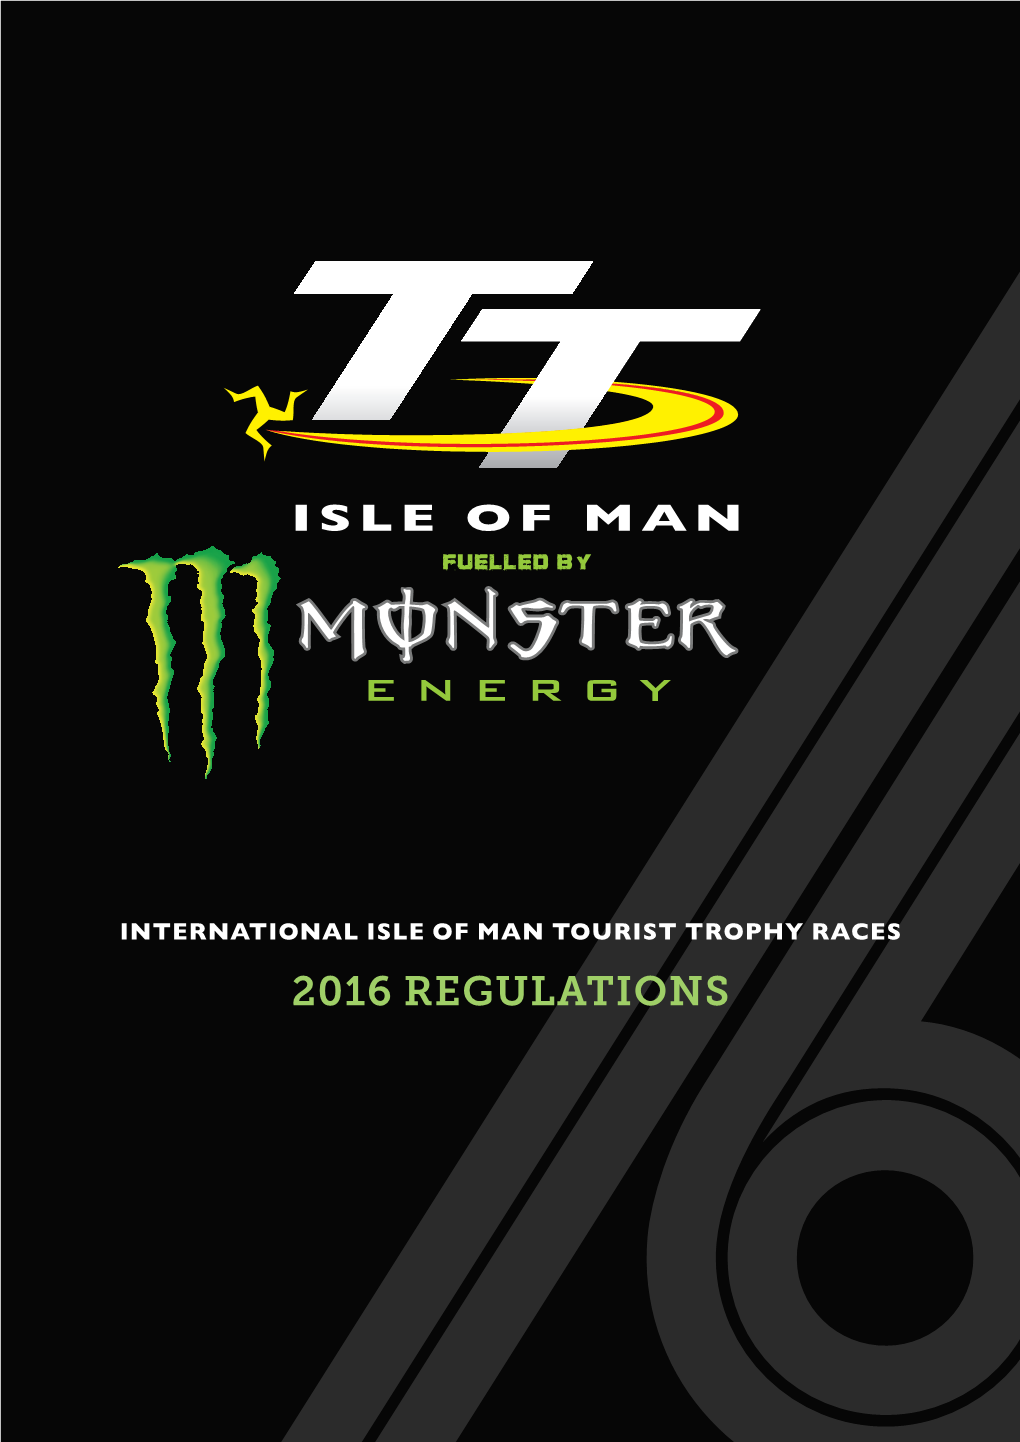 2016 REGULATIONS Contents Contents International Isle of Man Tourist Races - 2016 Regulations